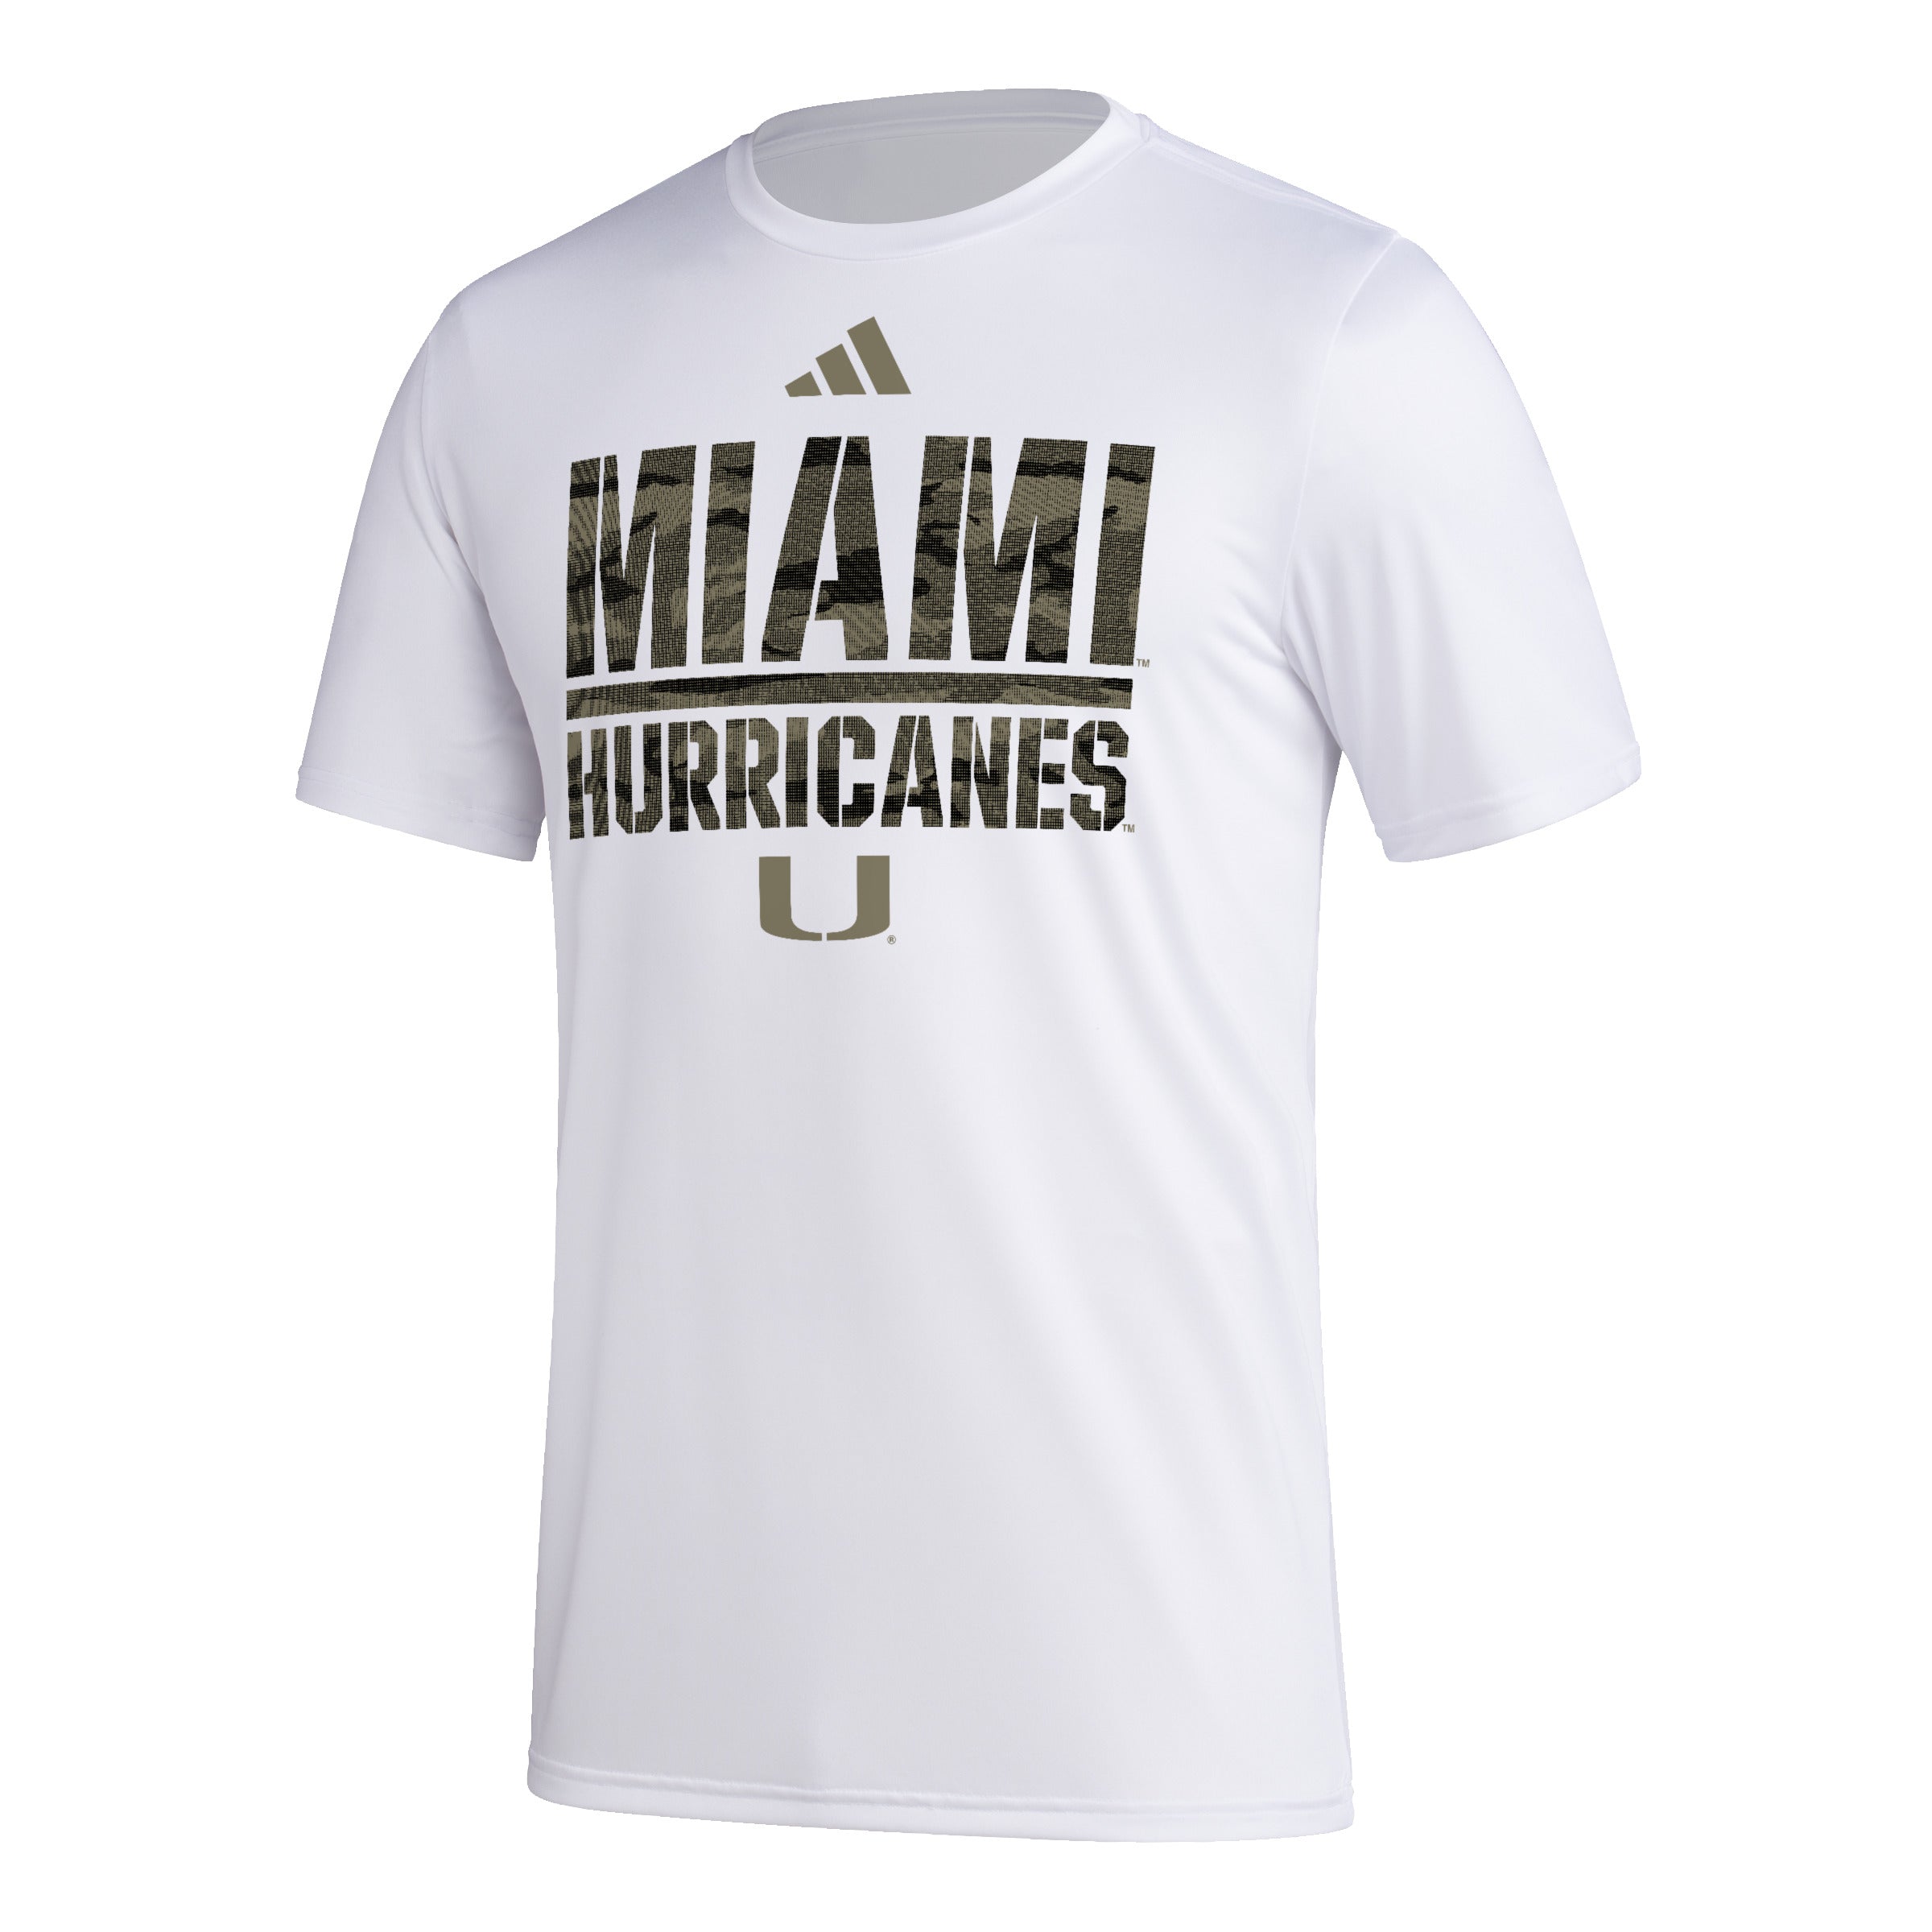 We Don't Run From Hurricanes T-Shirt – Sandbar Tees